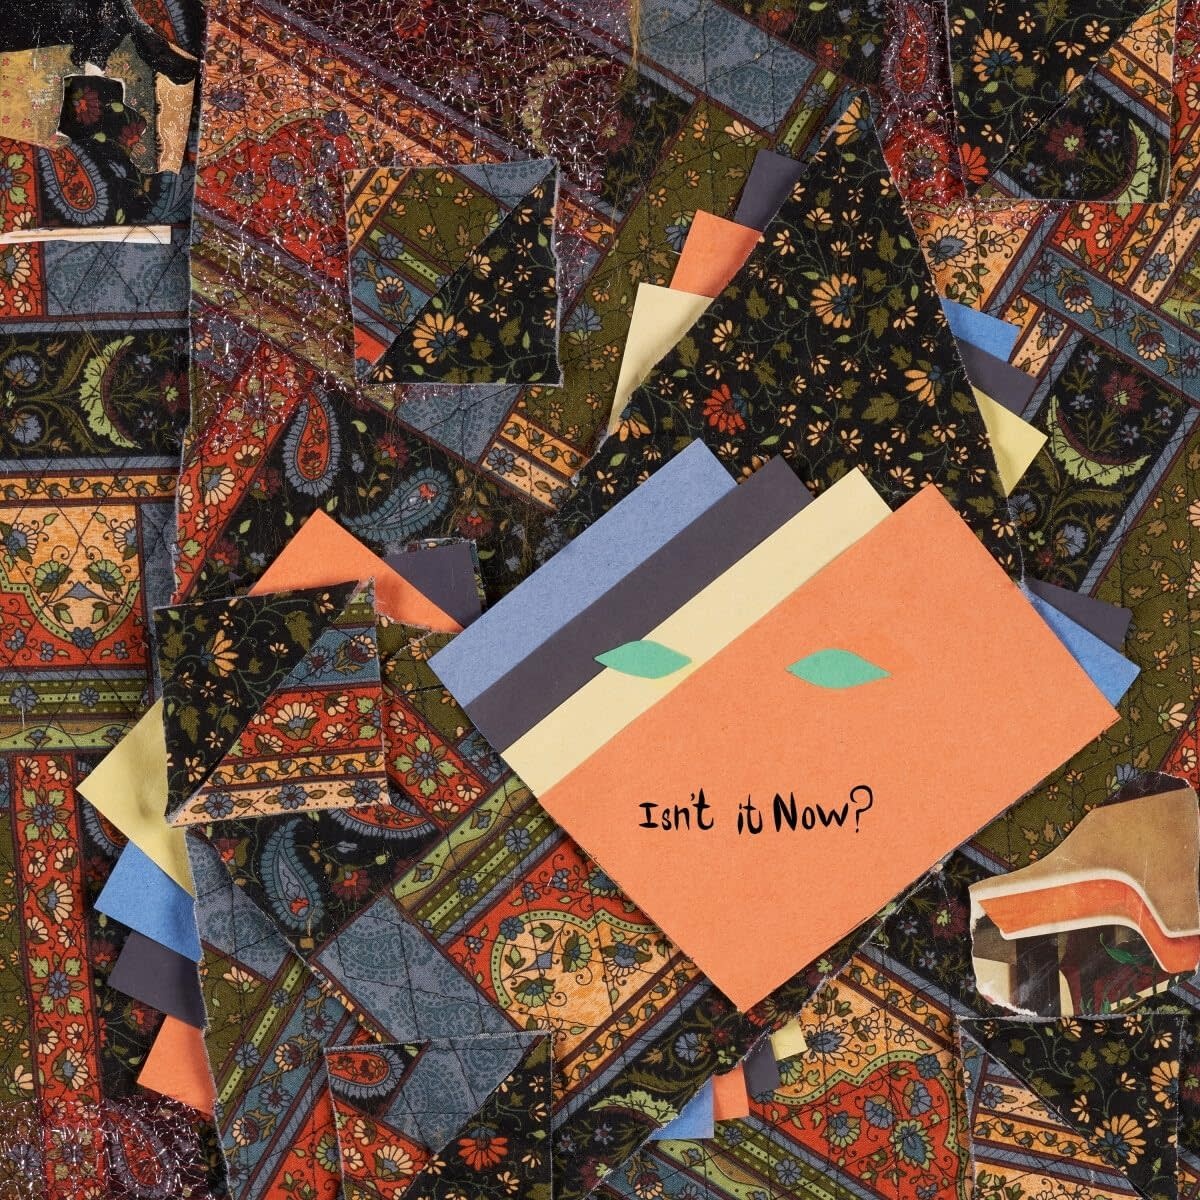 Rock/Pop Animal Collective - Isn't It Now? (Tangerine Vinyl)